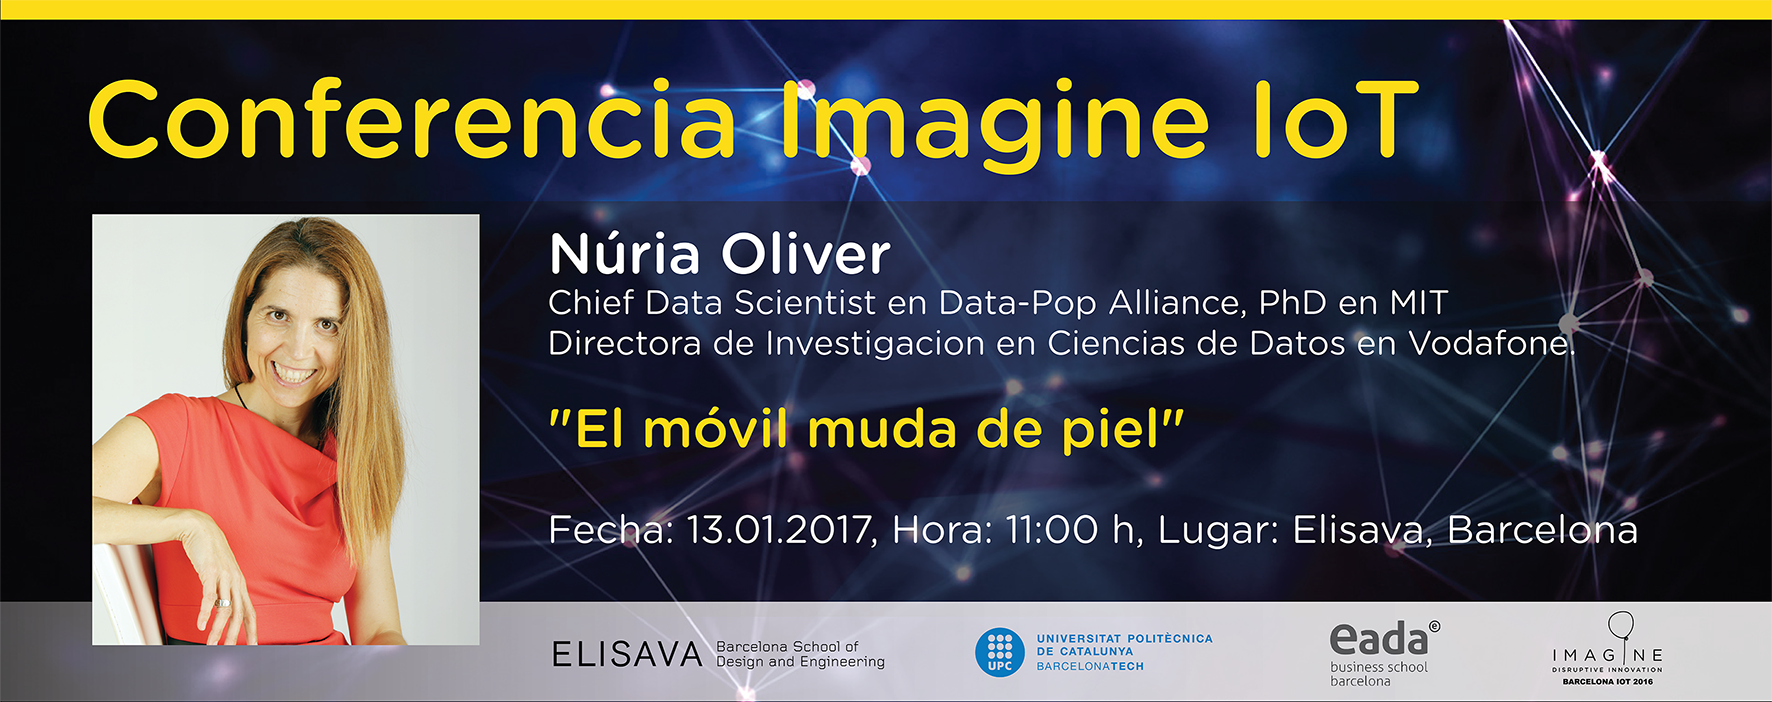 flyer-conferencia-imagine-iot-nuria-oliver-baja